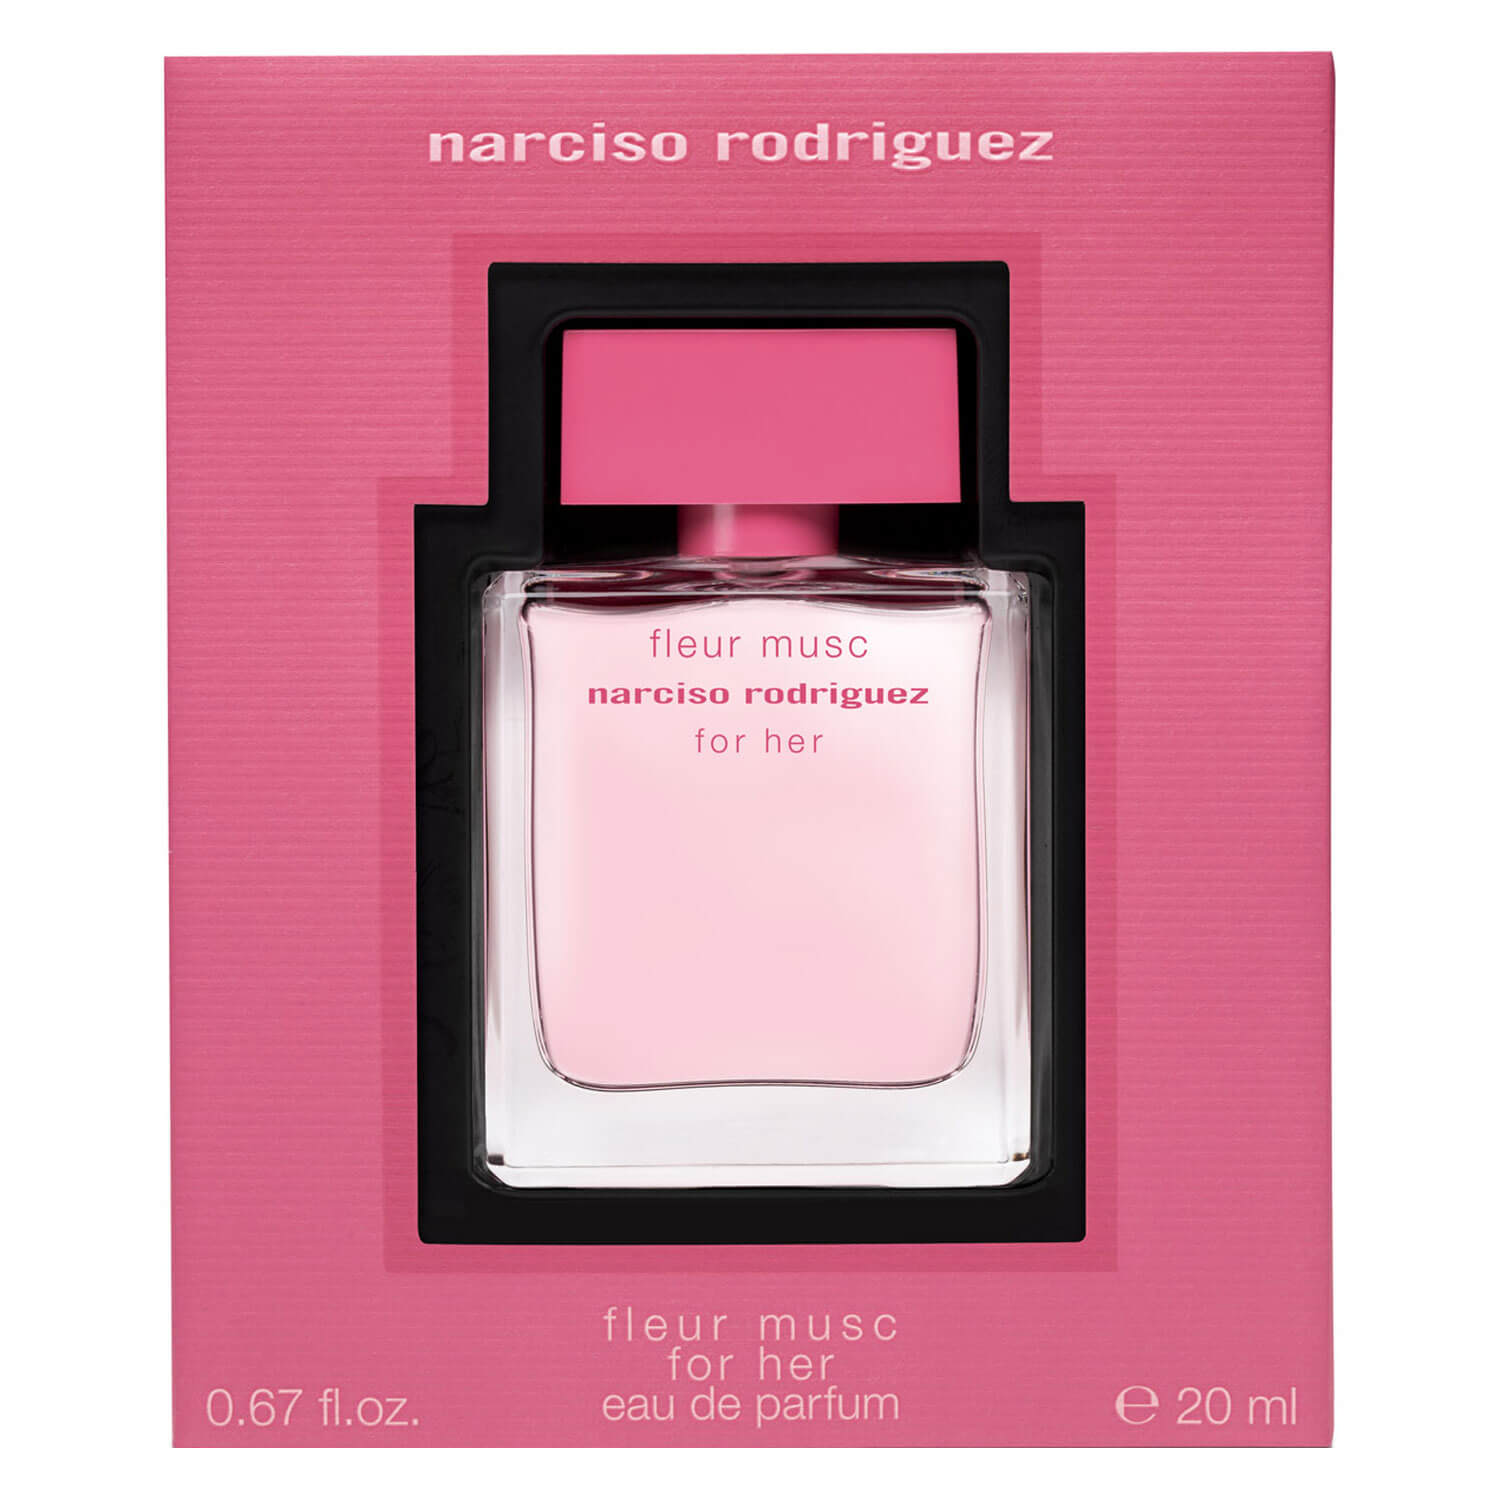 Родригес флер. Narciso Rodriguez fleur Musc for her 20мл. Narciso Rodriguez for her Eau de Parfum 20 ml. Narciso Rodriguez for her EDP 20ml. Narciso Rodriguez rouge 20 мл.